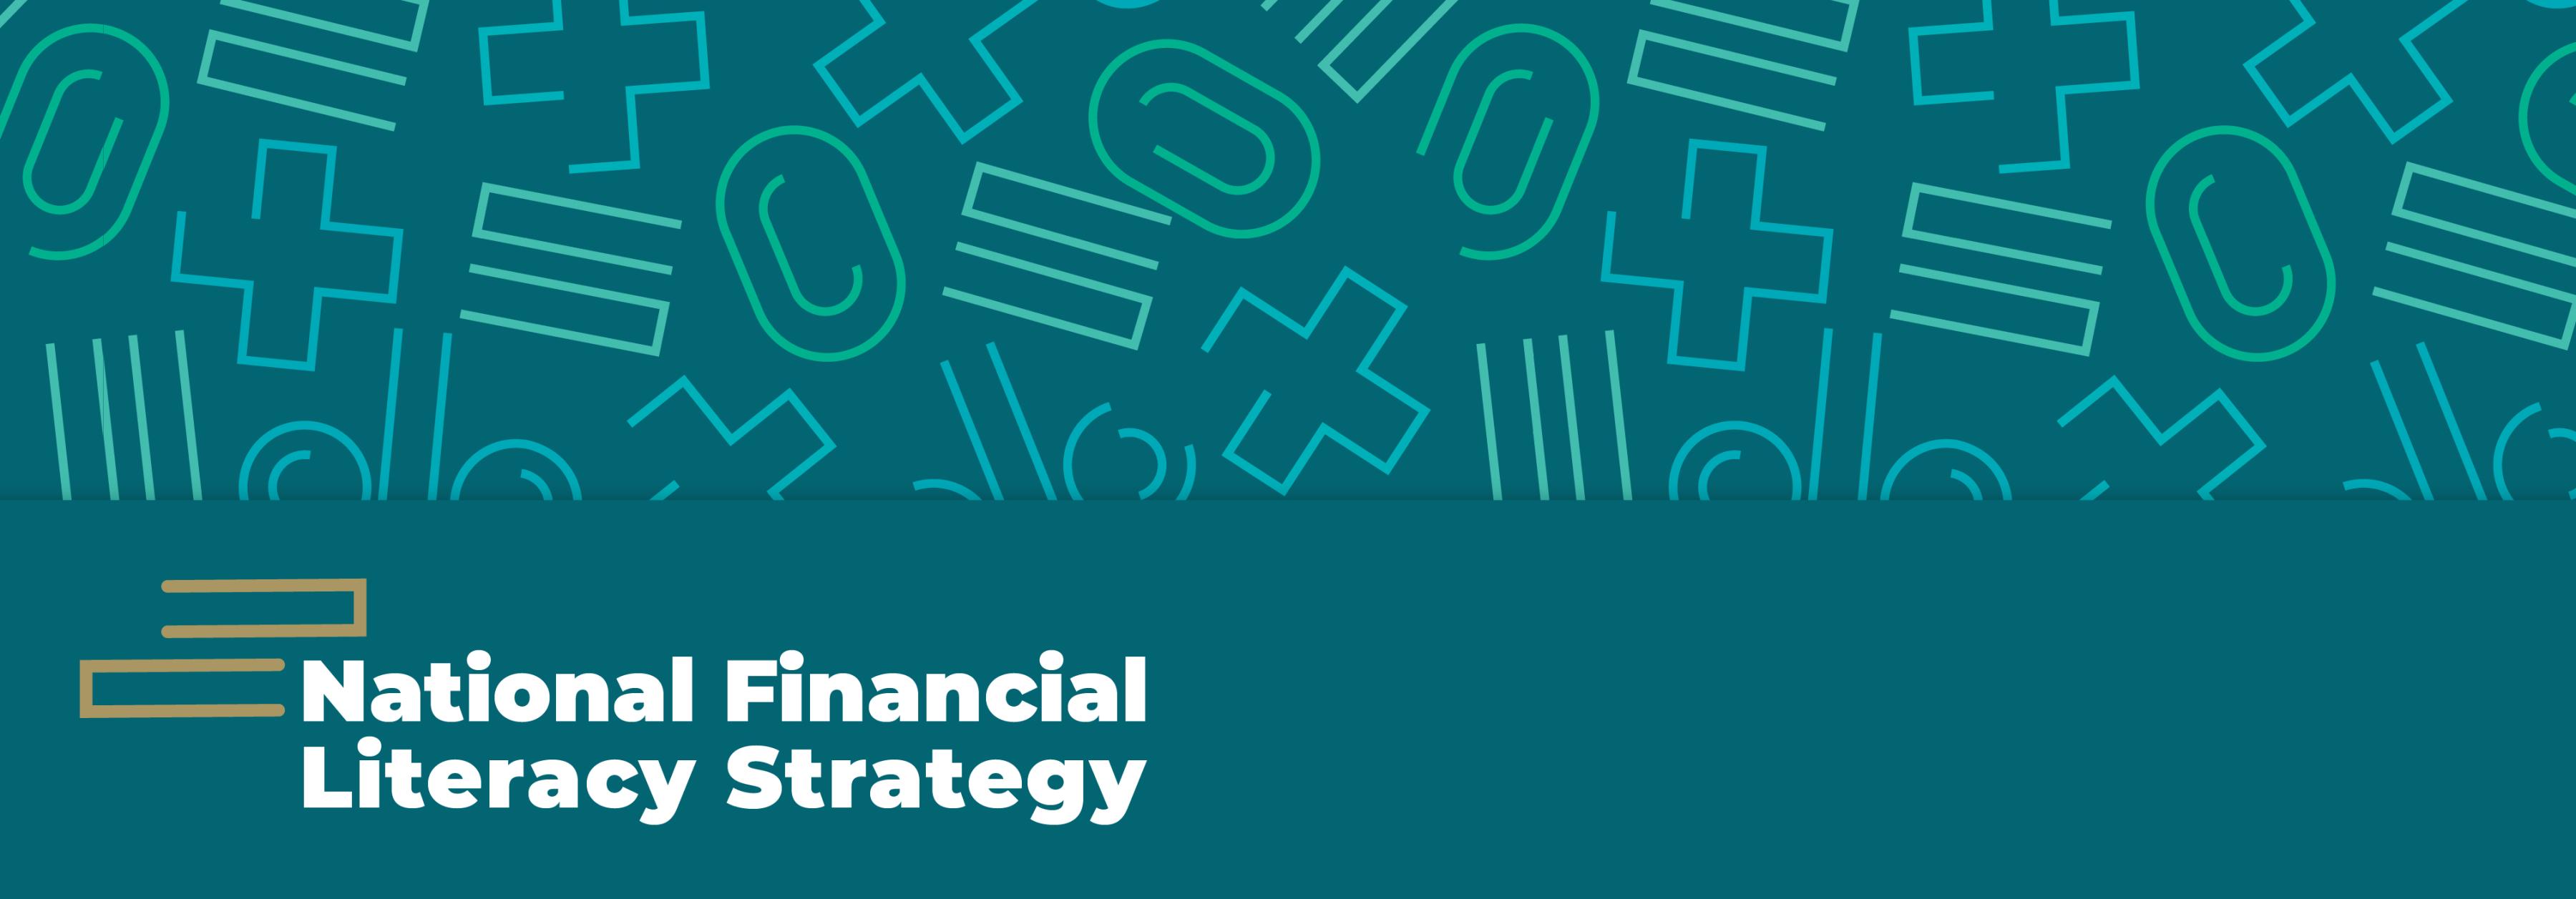 National-Financial-Literacy-Strategy_v1-01